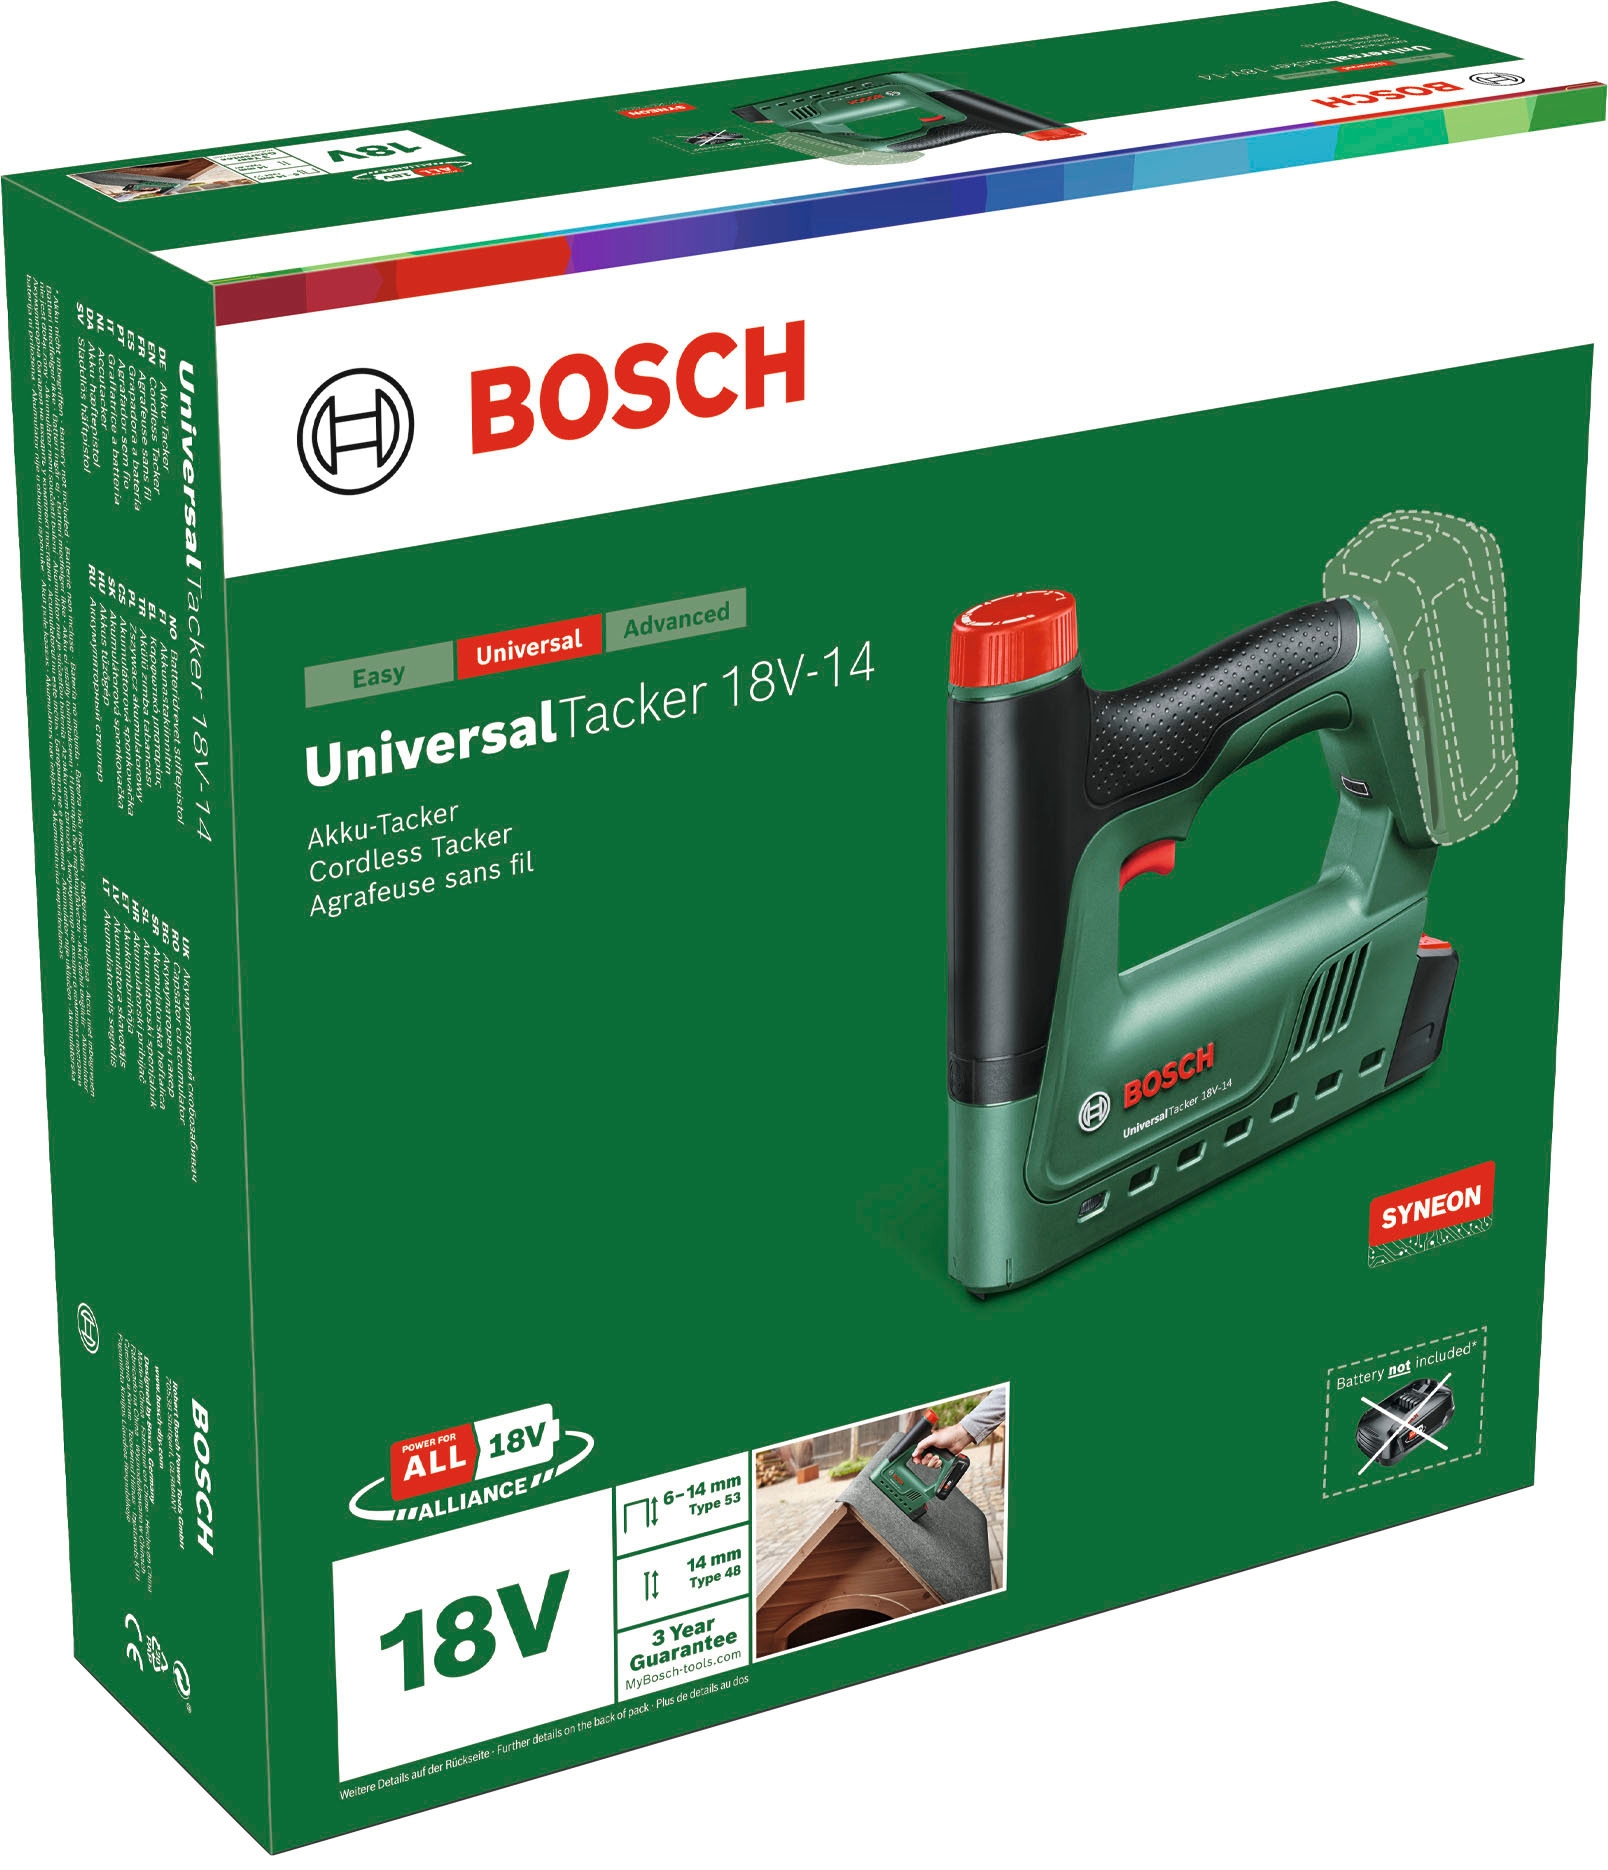 Bosch Home & Garden Akku-Tacker »UniversalTacker 18V-14 - solo«, ohne Akku und Ladegerät